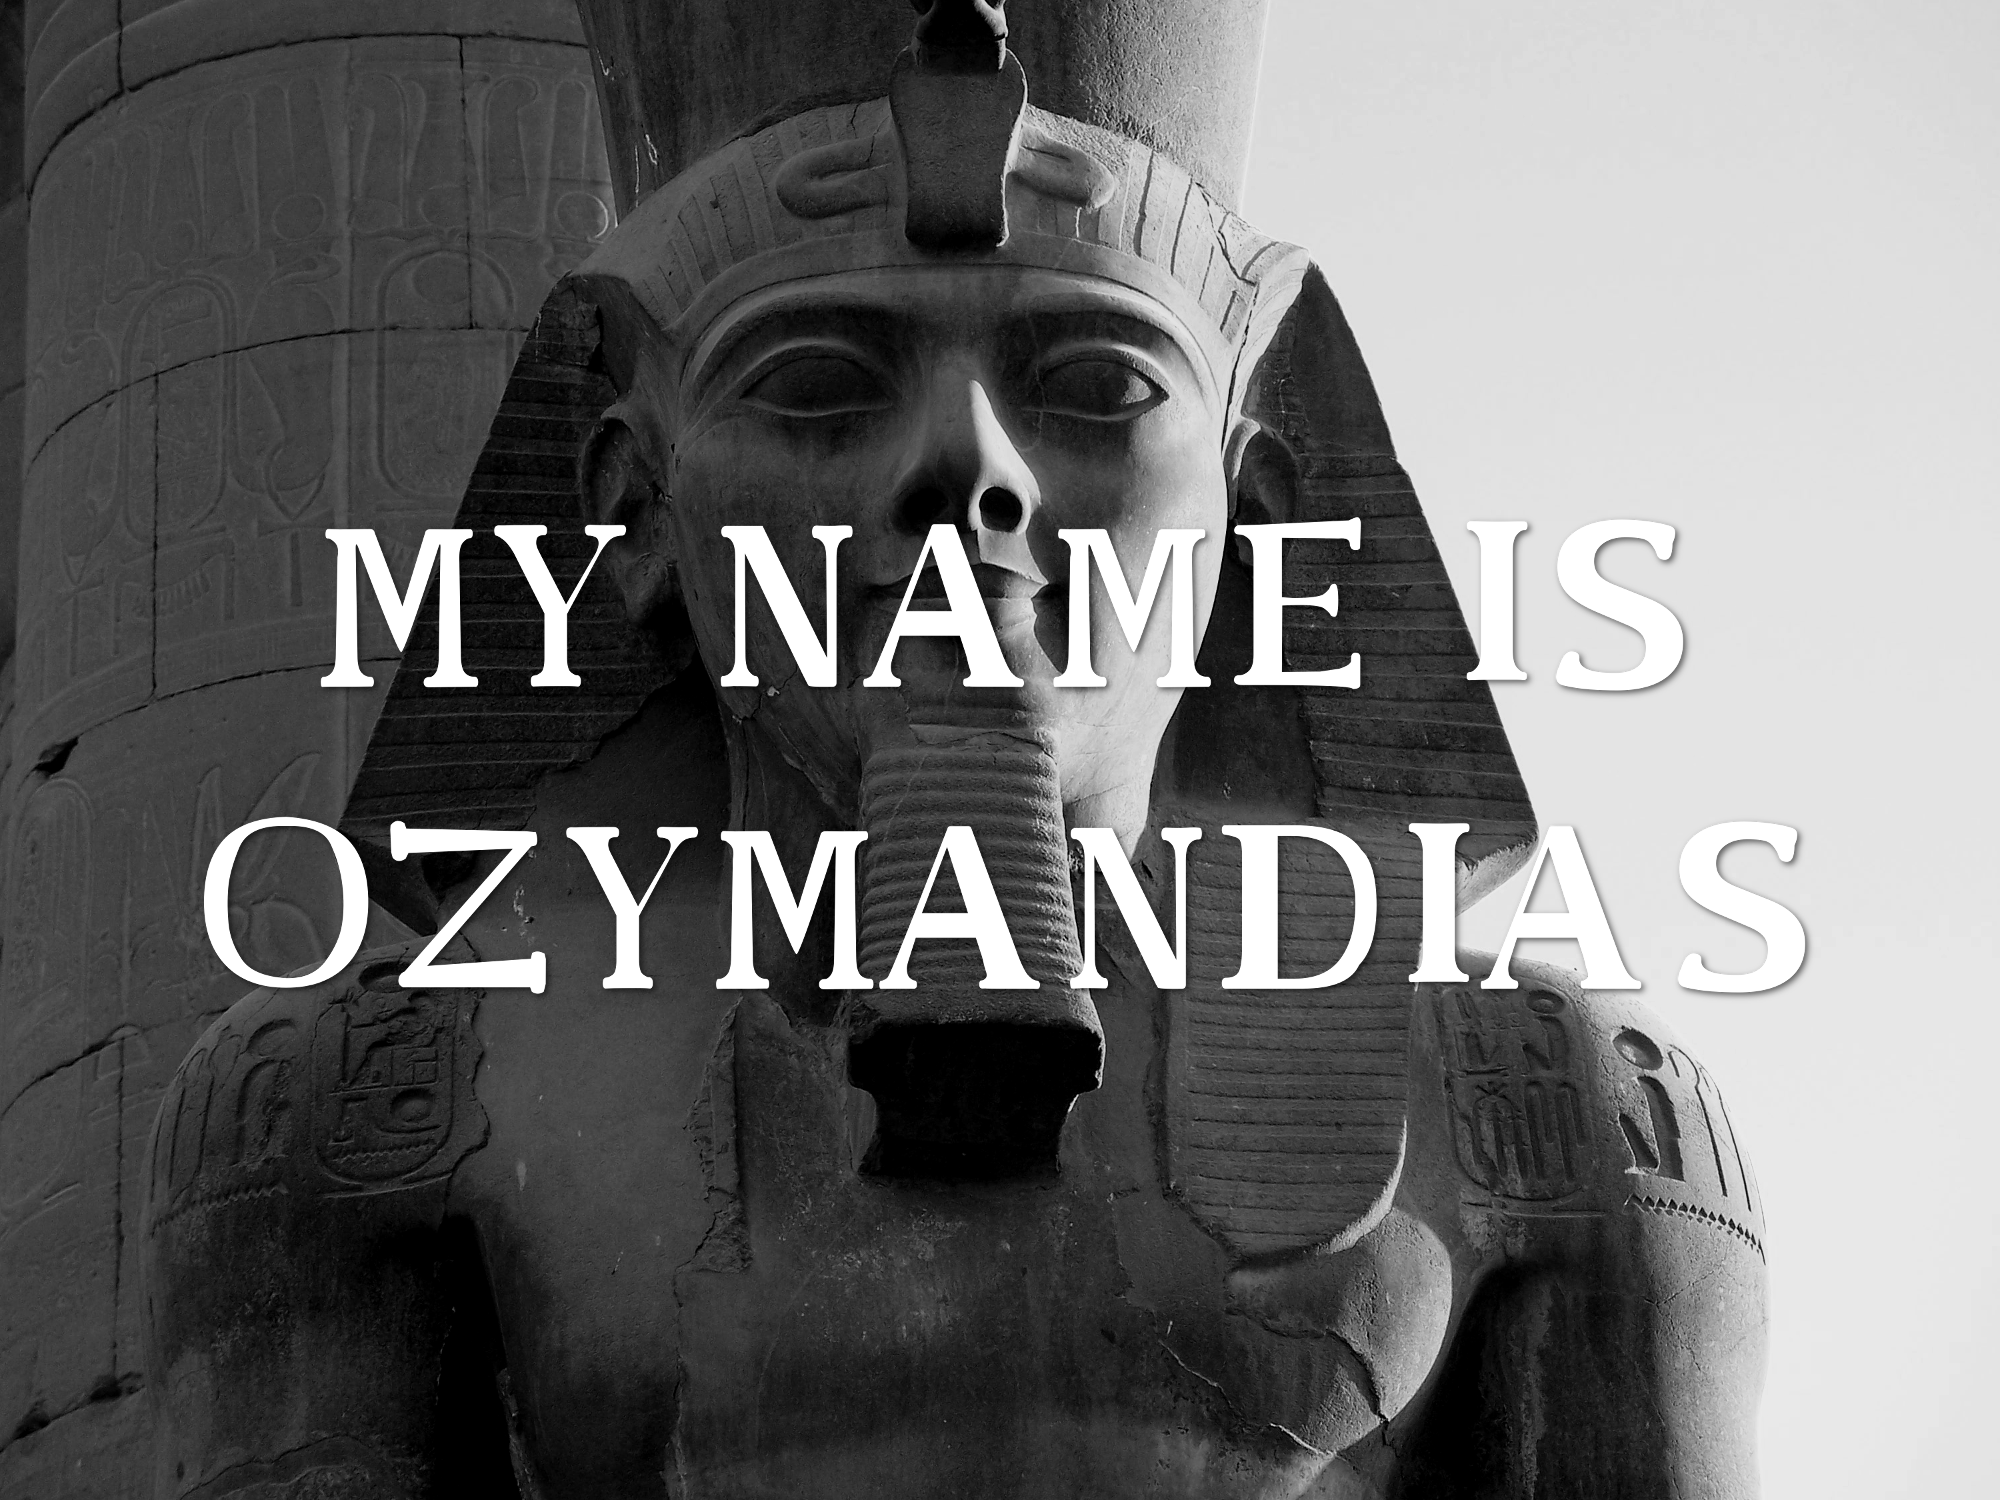 MY NAME IS OZYMANDIAS